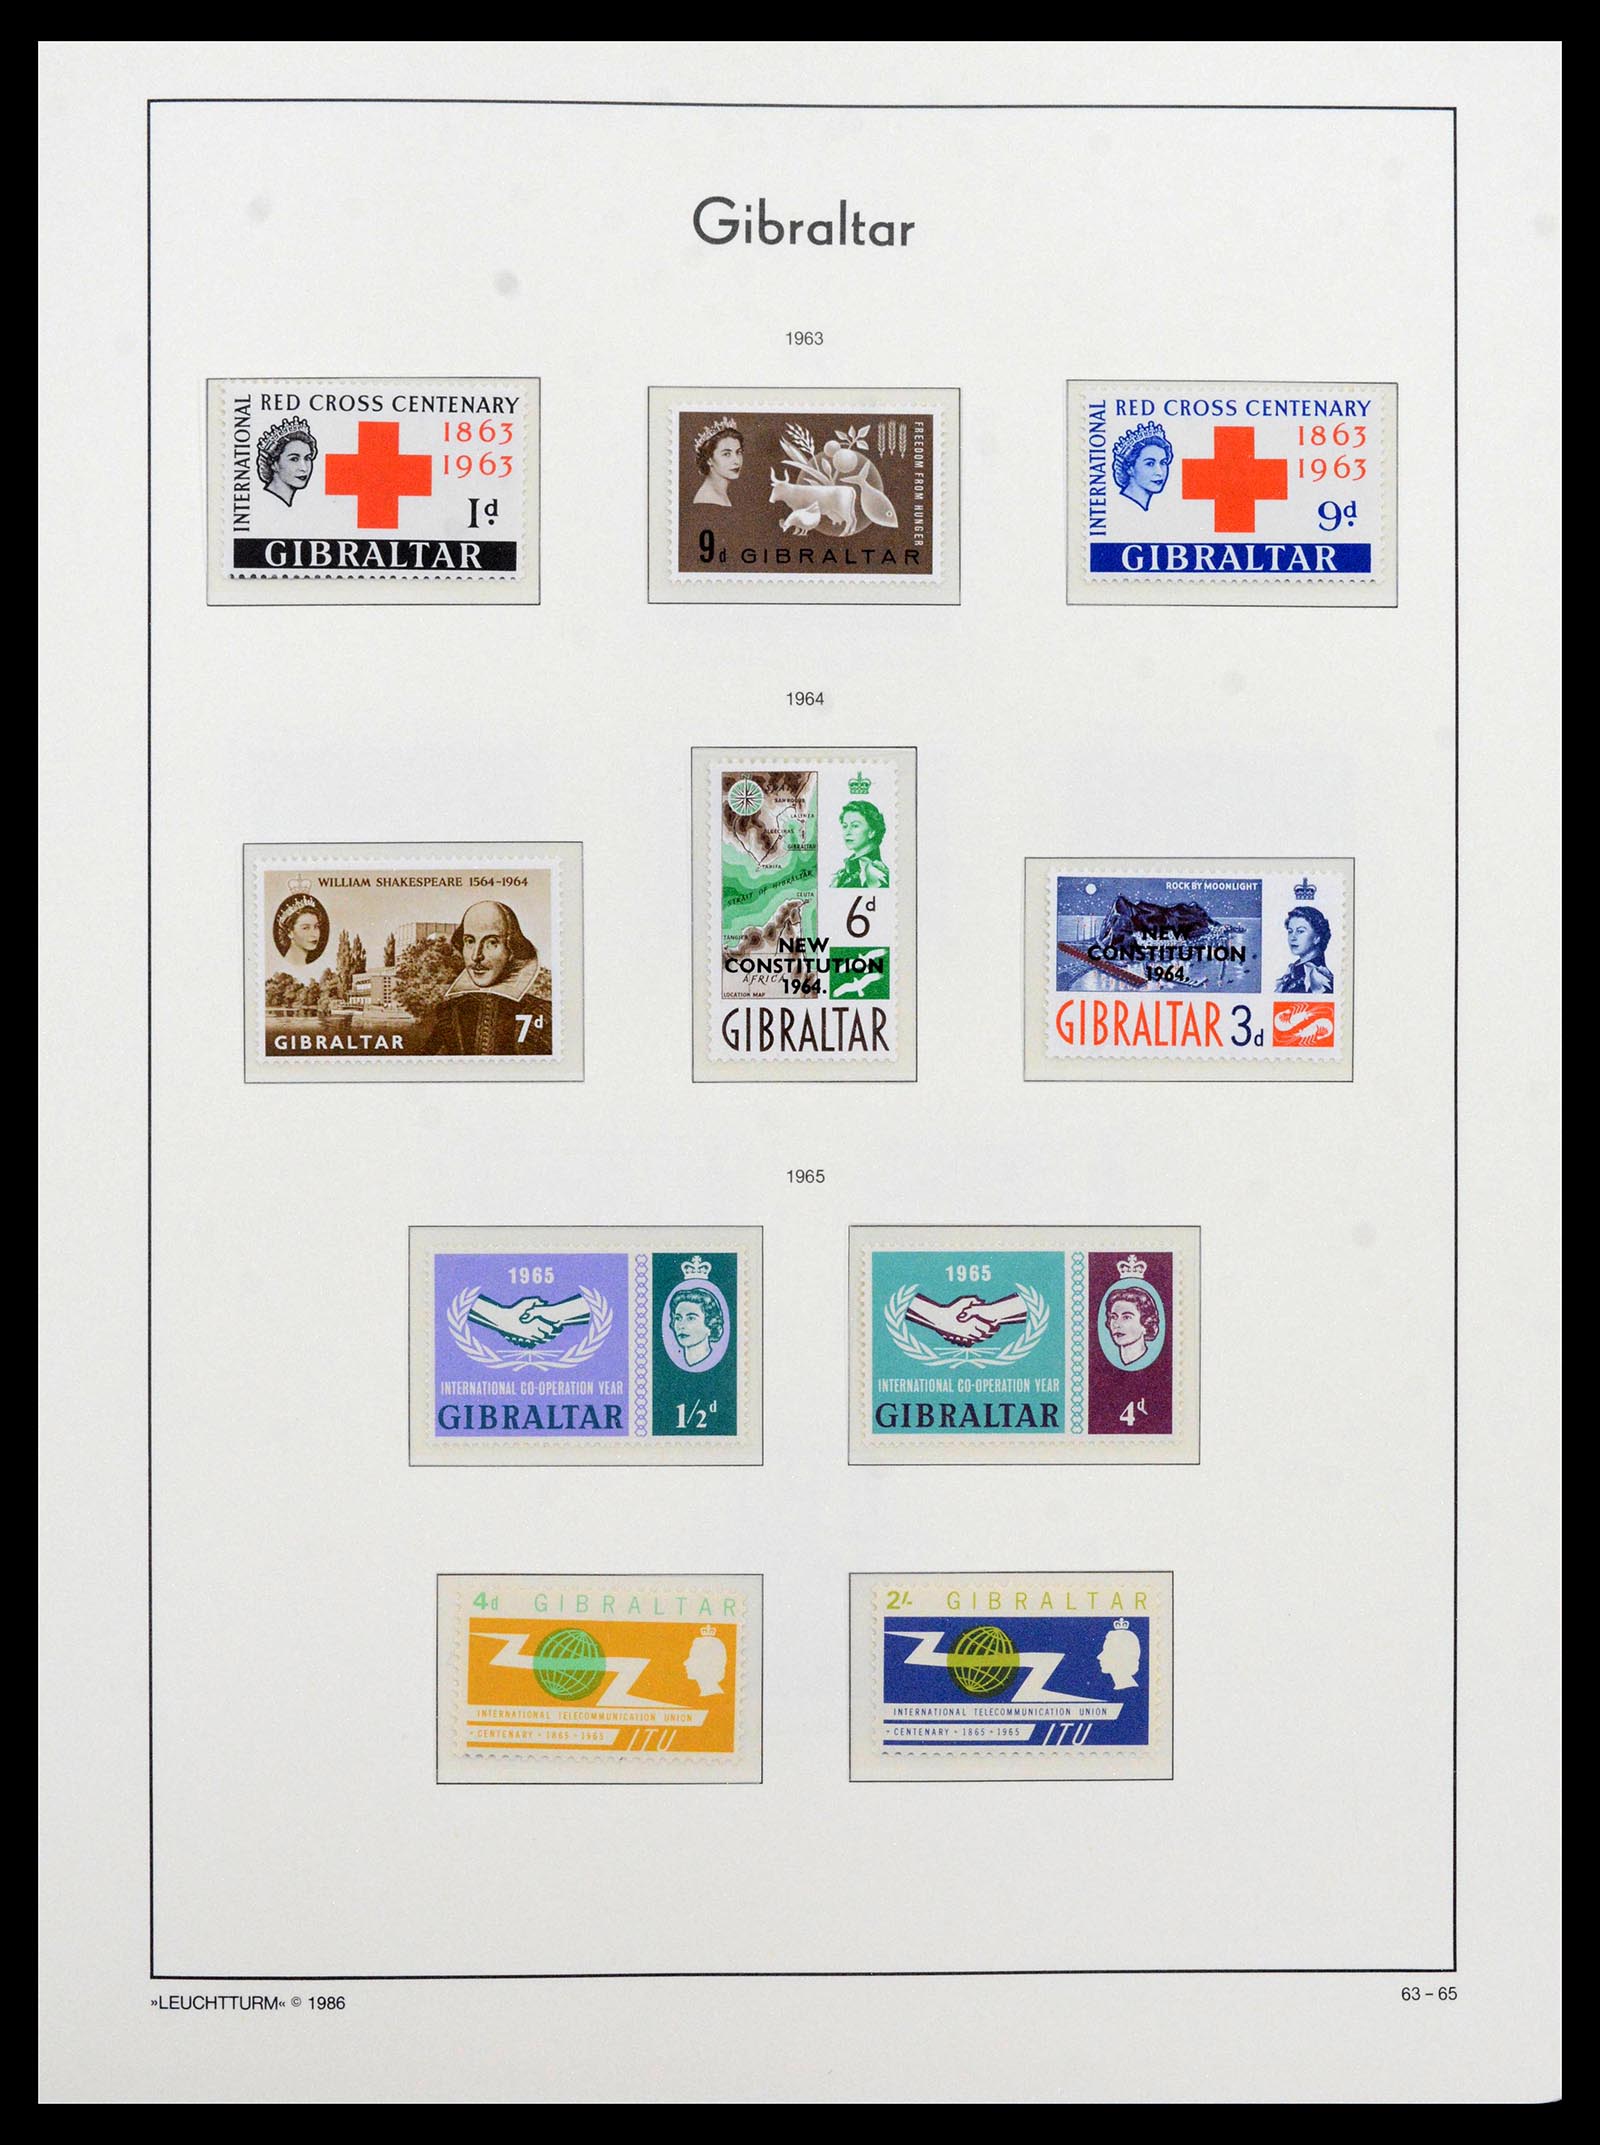 39158 0015 - Stamp collection 39158 Gibraltar 1886-2013.